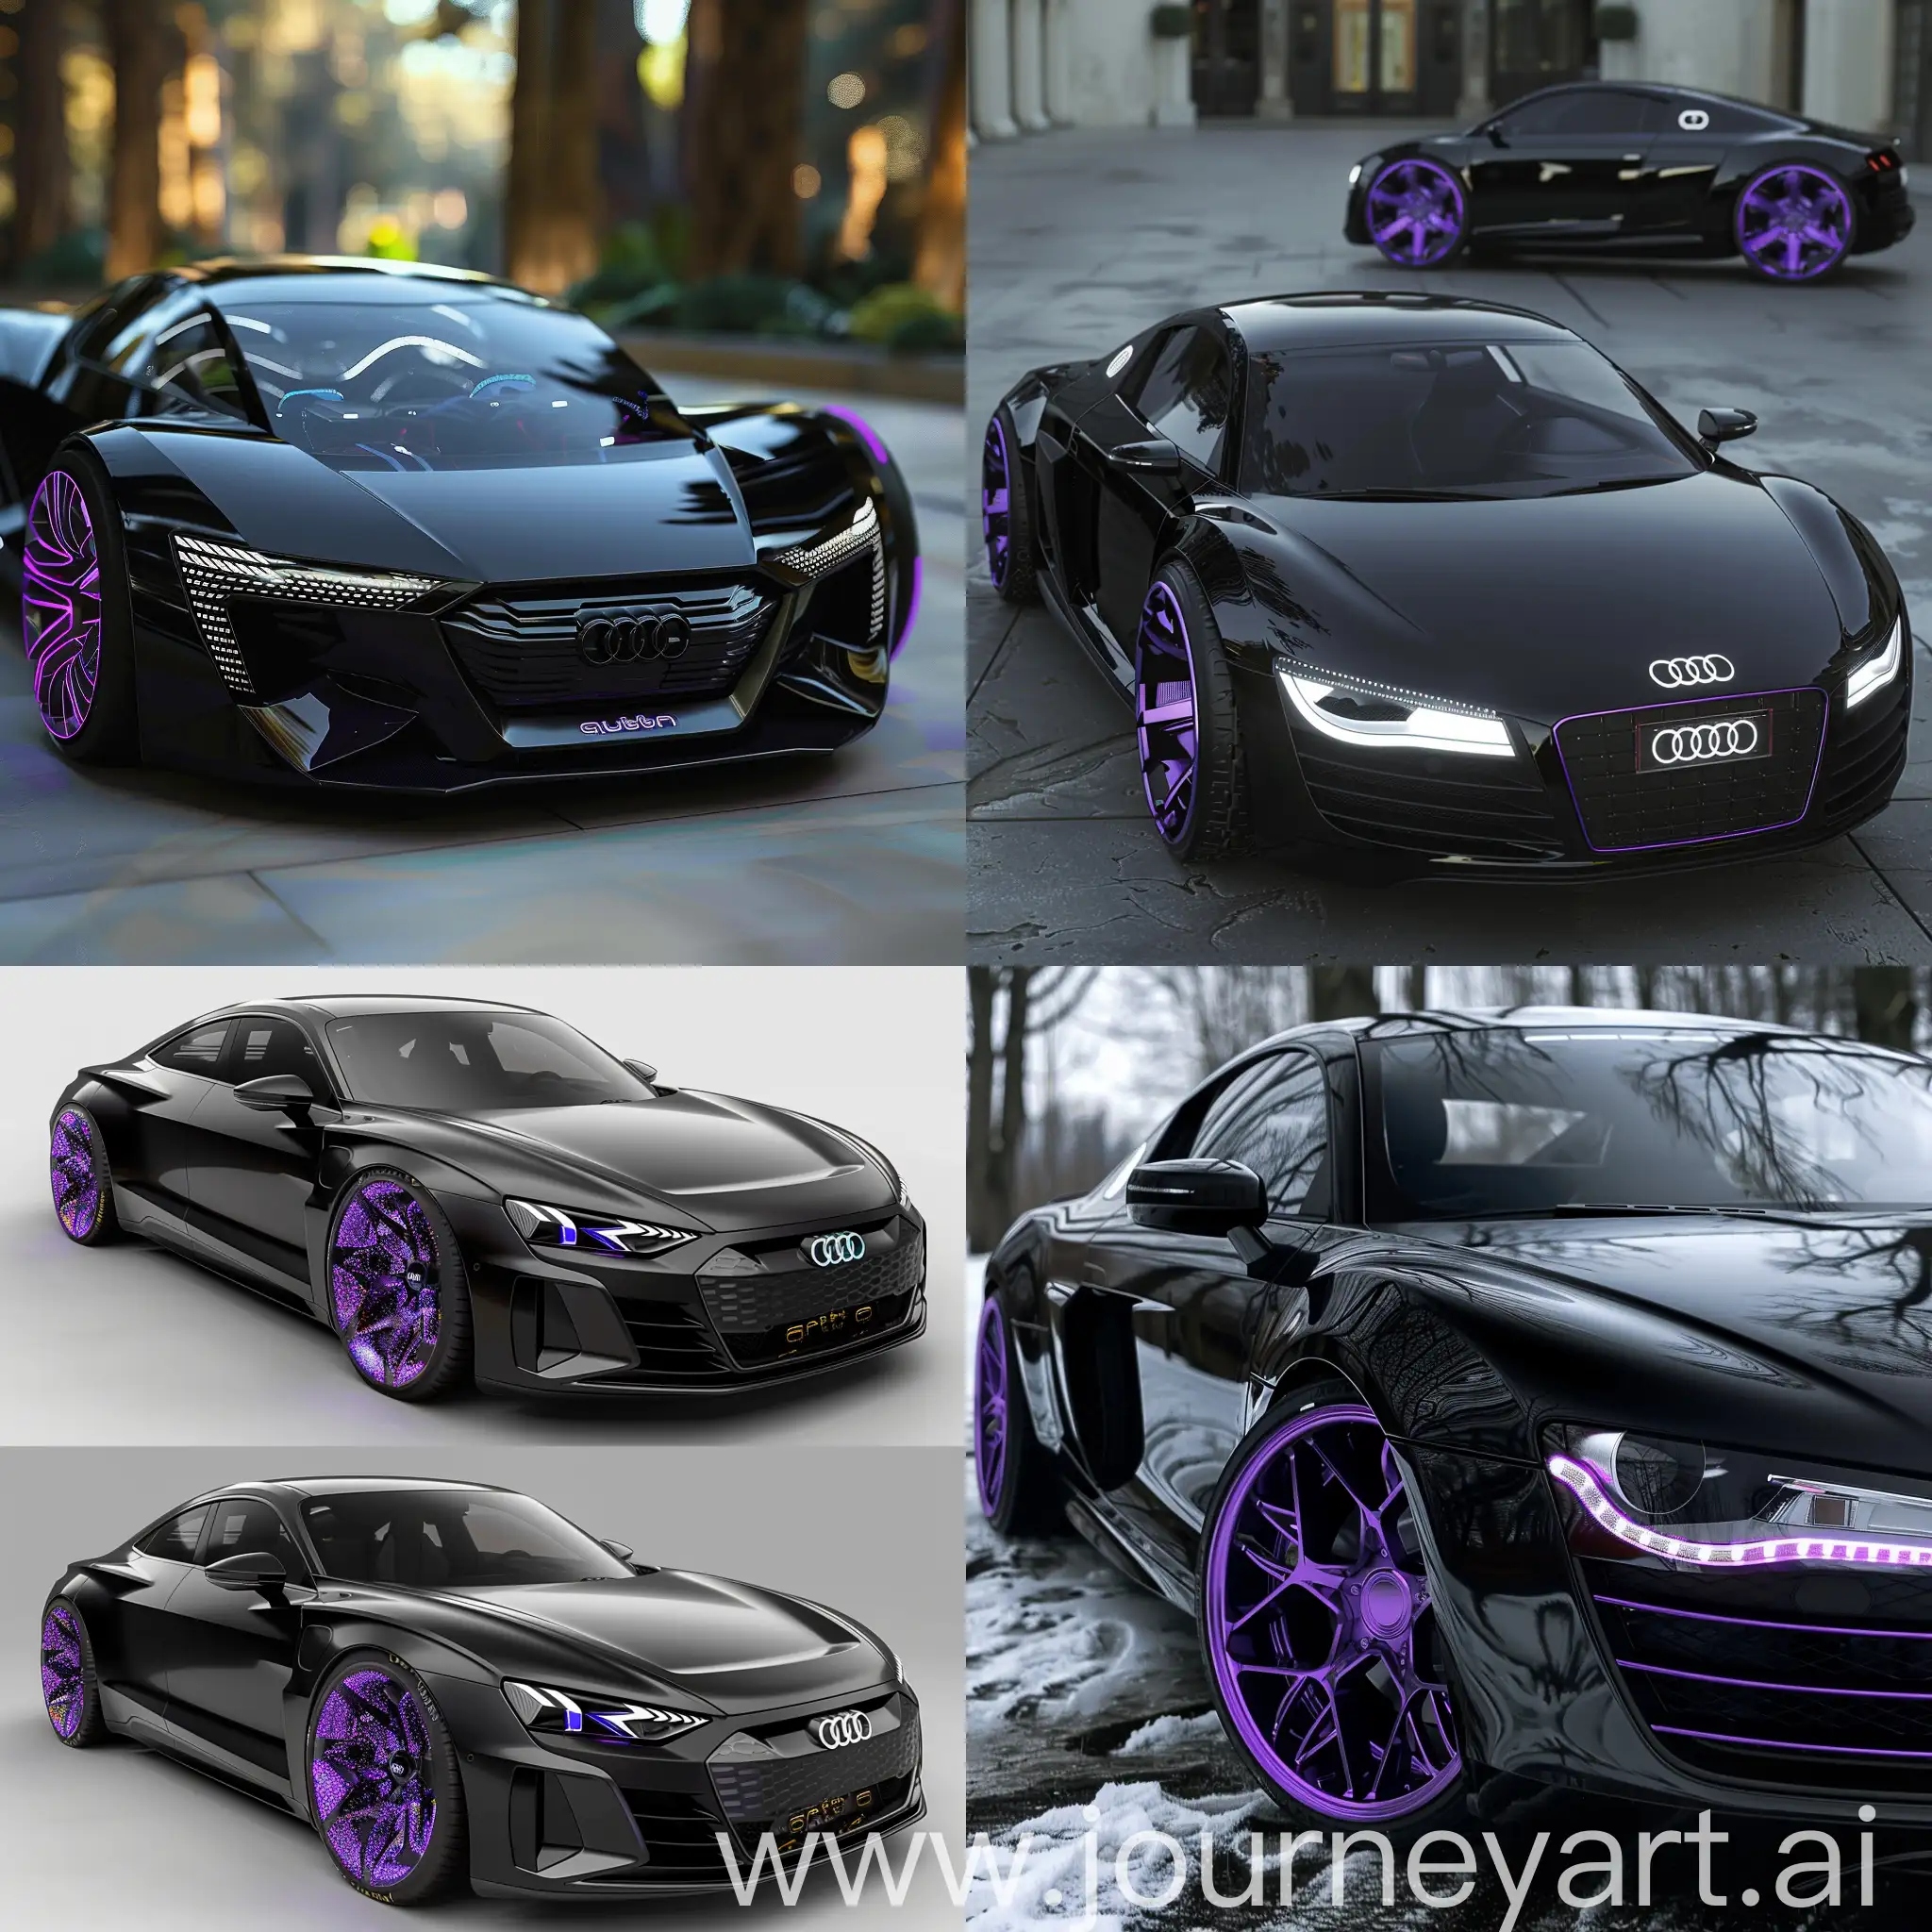 Futuristic-Black-Audi-Sport-Car-with-Purple-Alloy-Wheels